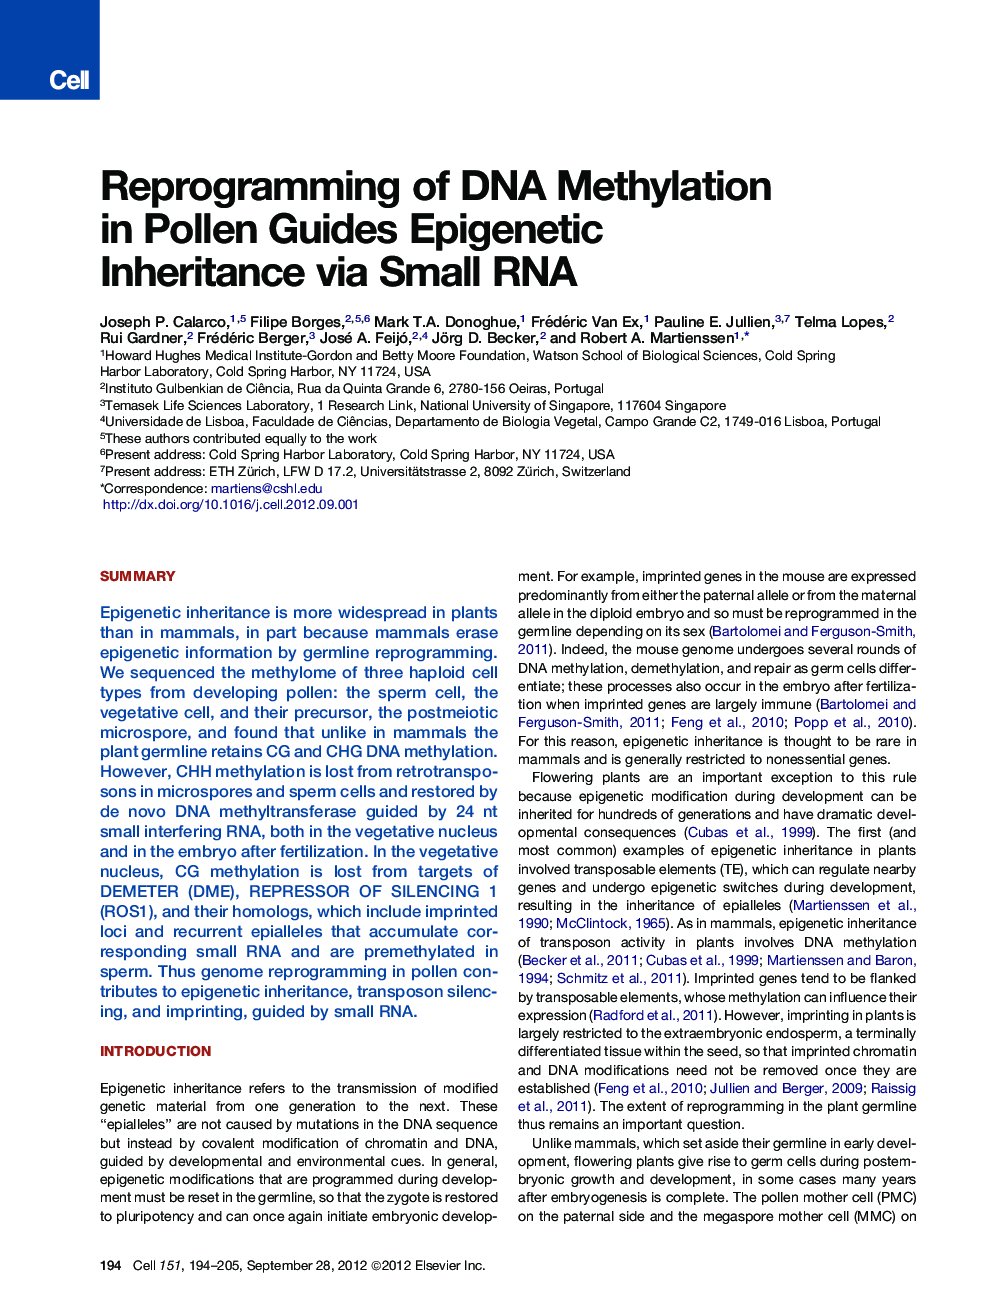 Reprogramming of DNA Methylation in Pollen Guides Epigenetic Inheritance via Small RNA